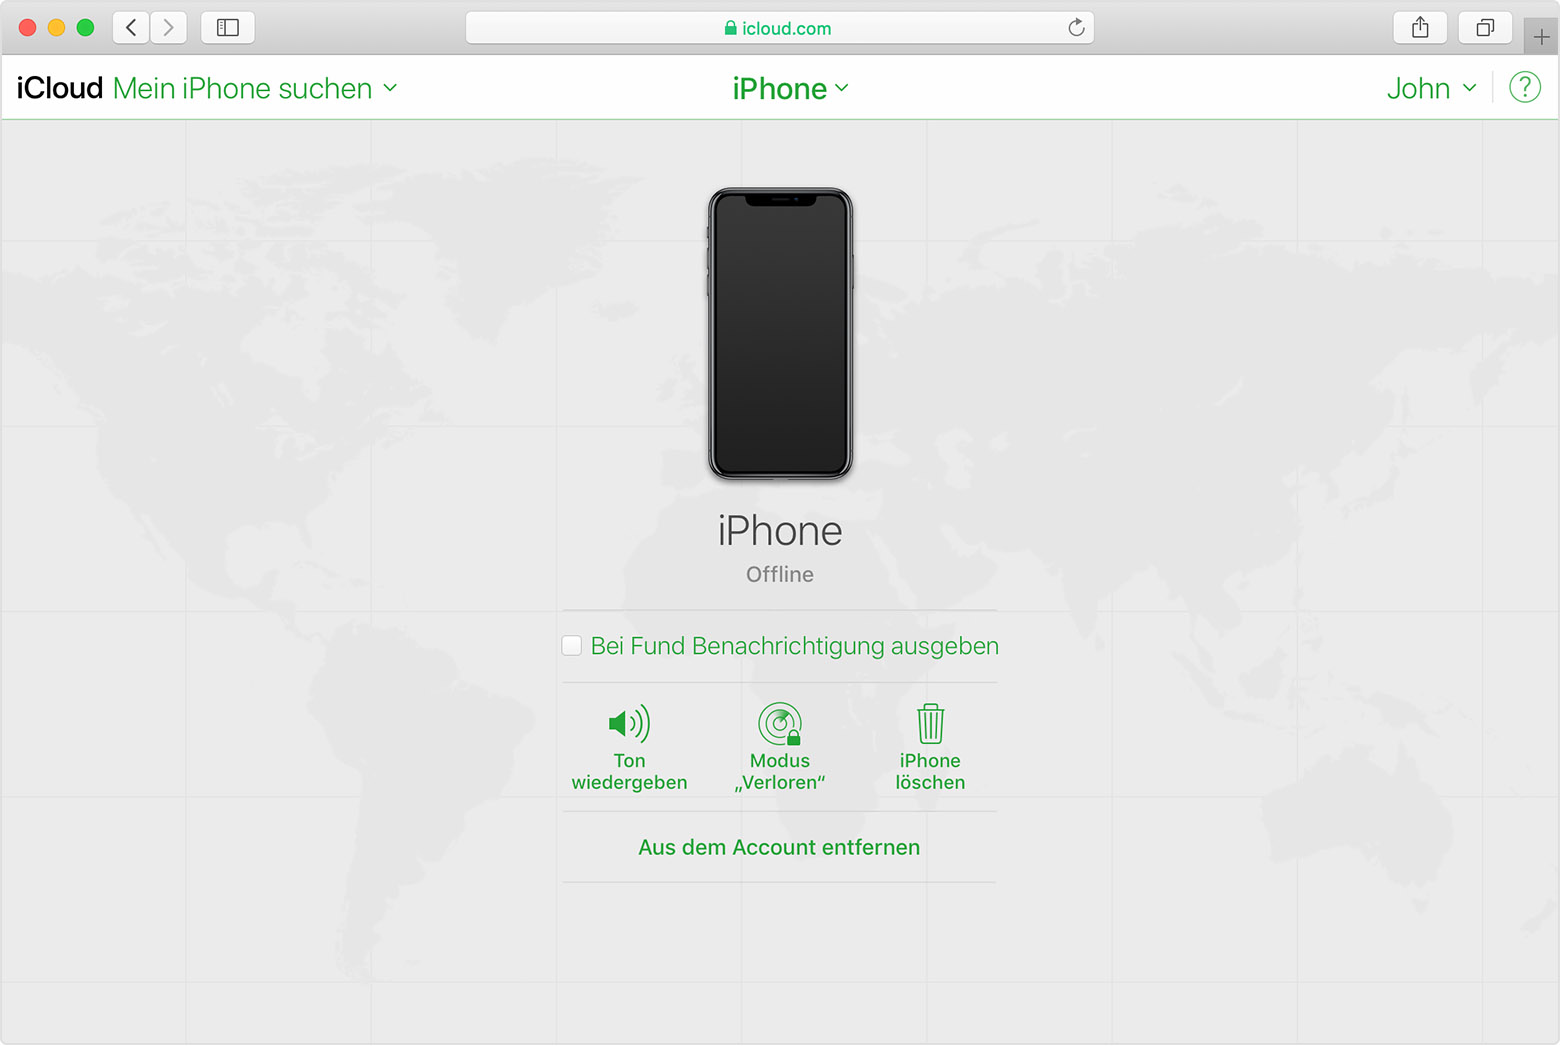 iPhone verloren? – ausgeschaltetes iPhone orten